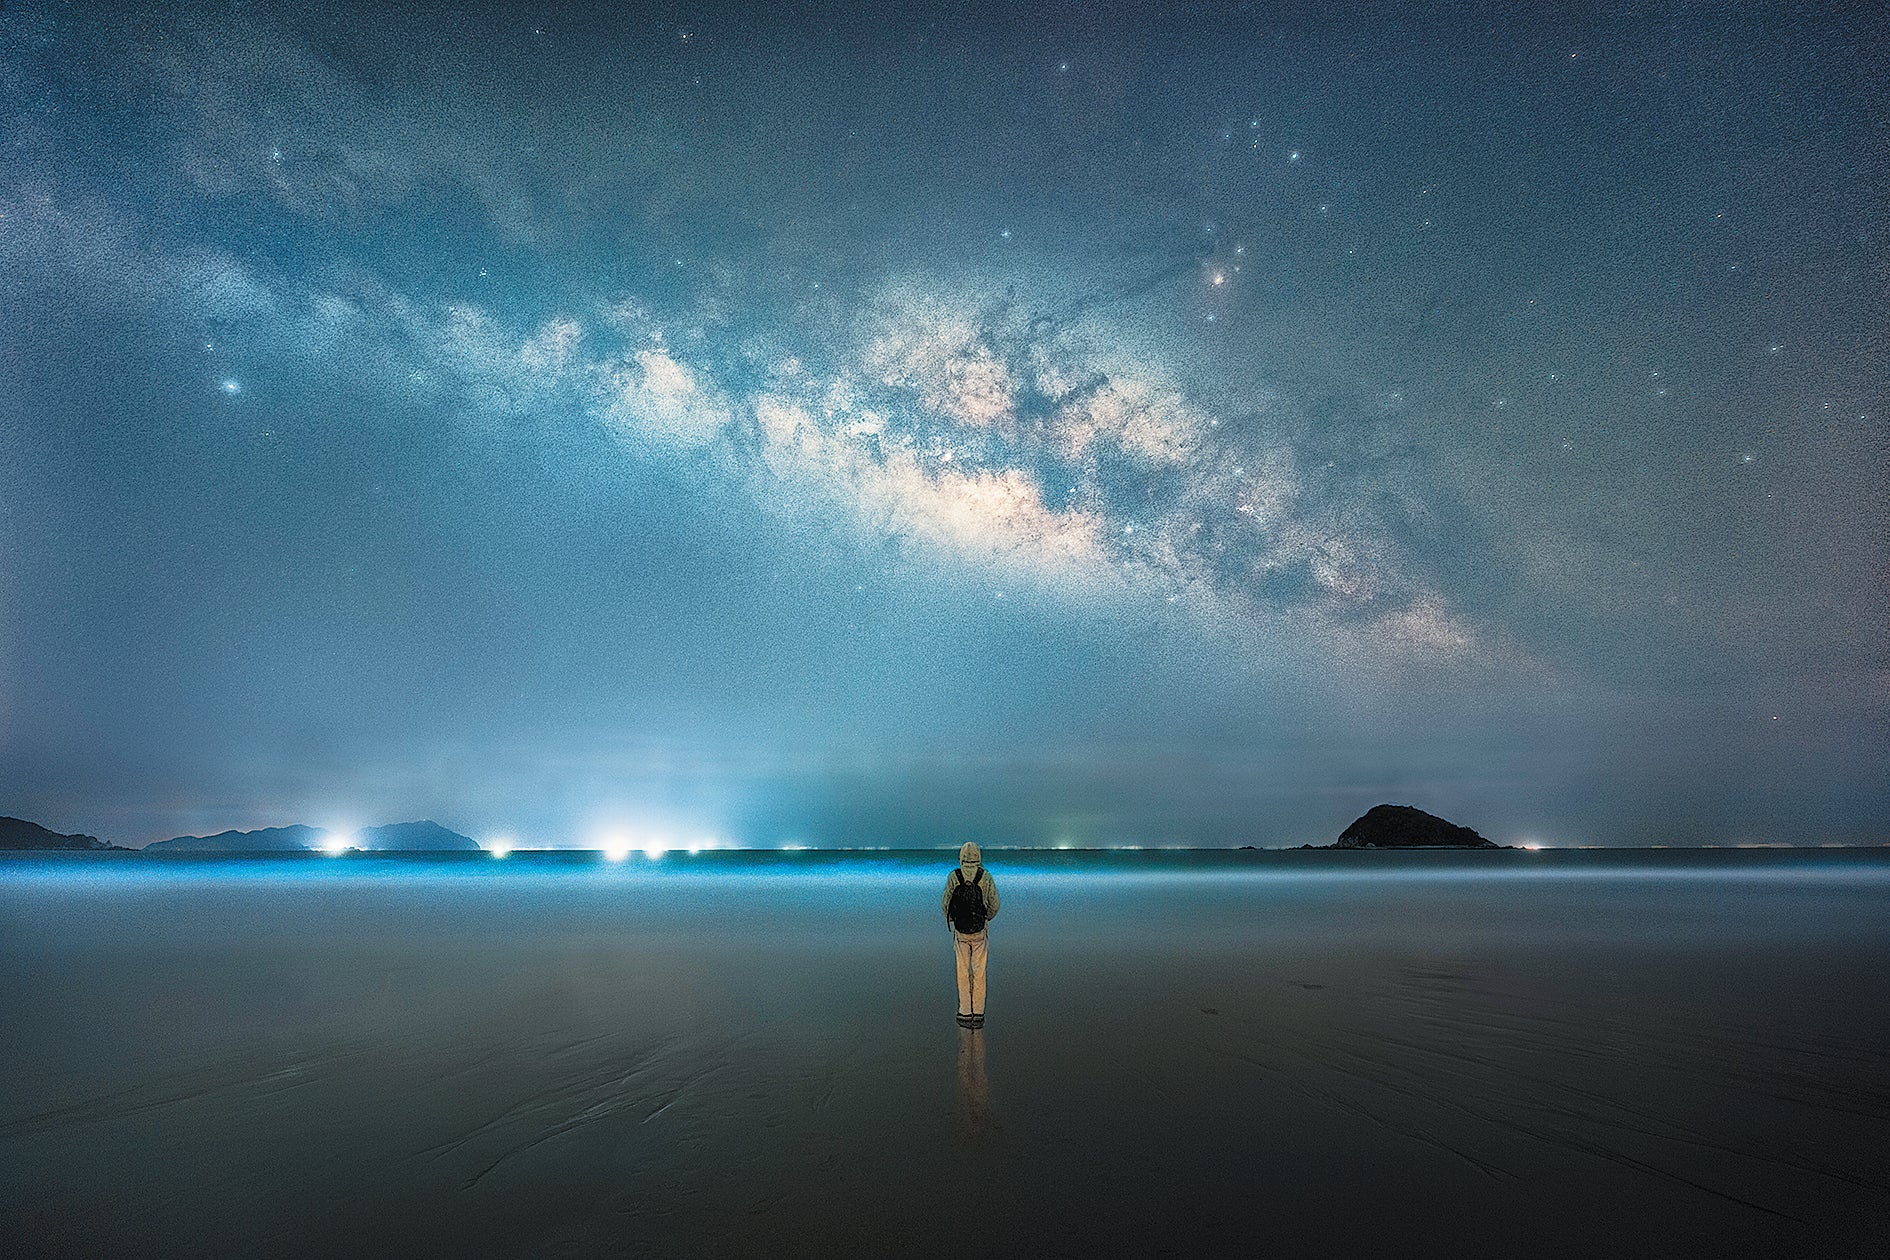 A night visitor to Xichong Beach in Shenzhen, Guangdong province, appreciates the sky